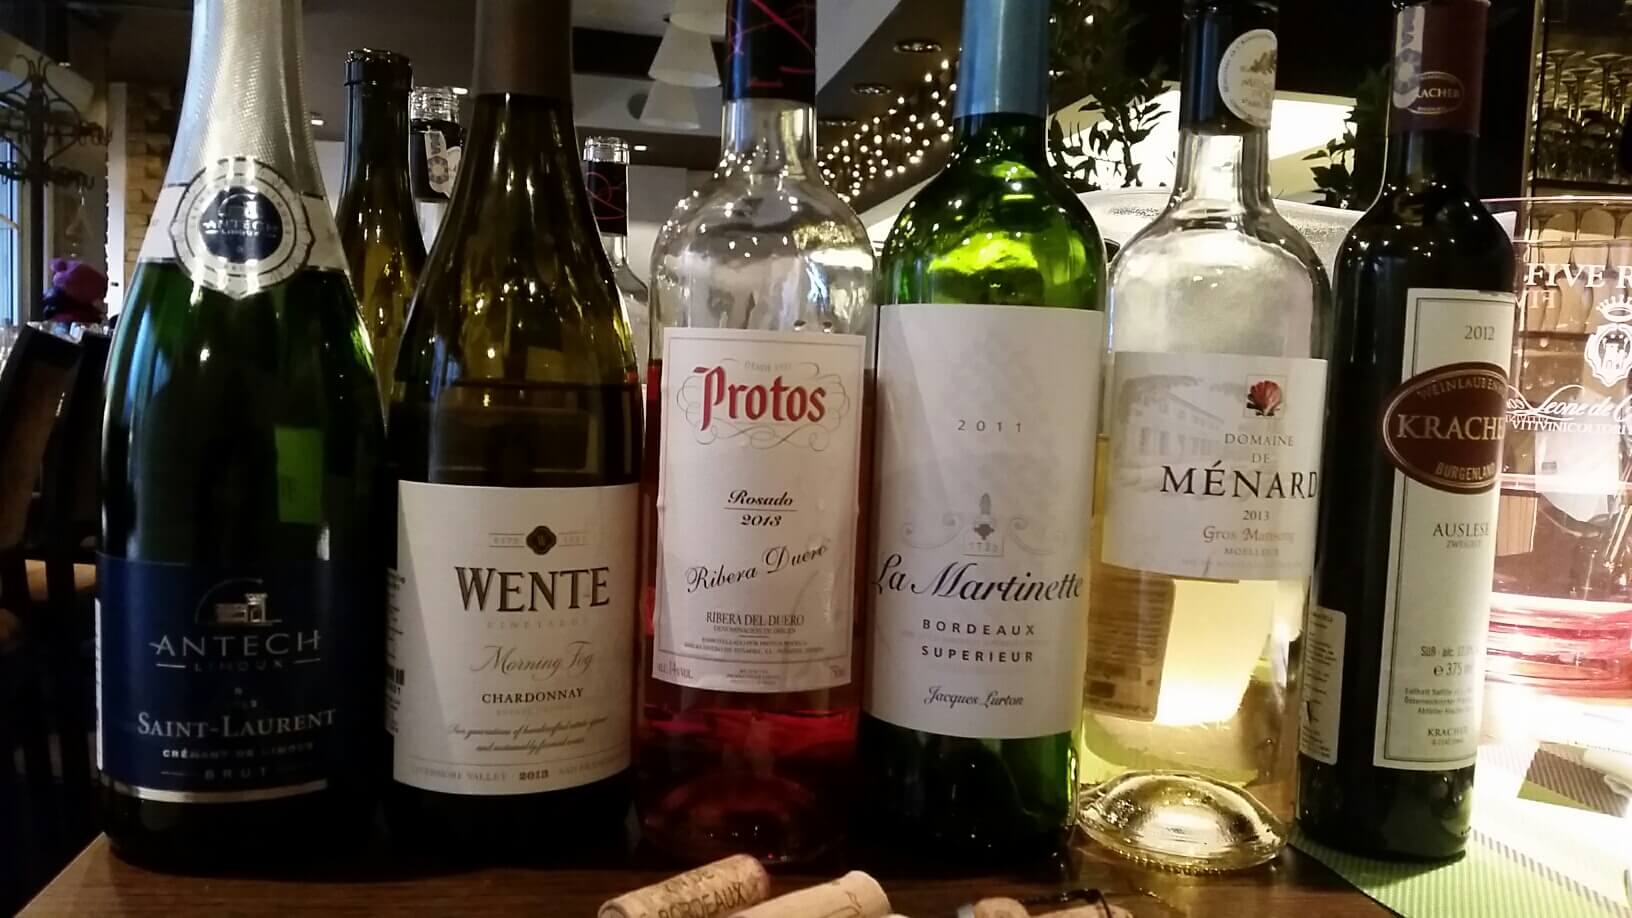 Antech Limoux, Menard Gros Manseng, Protos Rosaso, Martinette Bordeaux, Wente Chardonnay